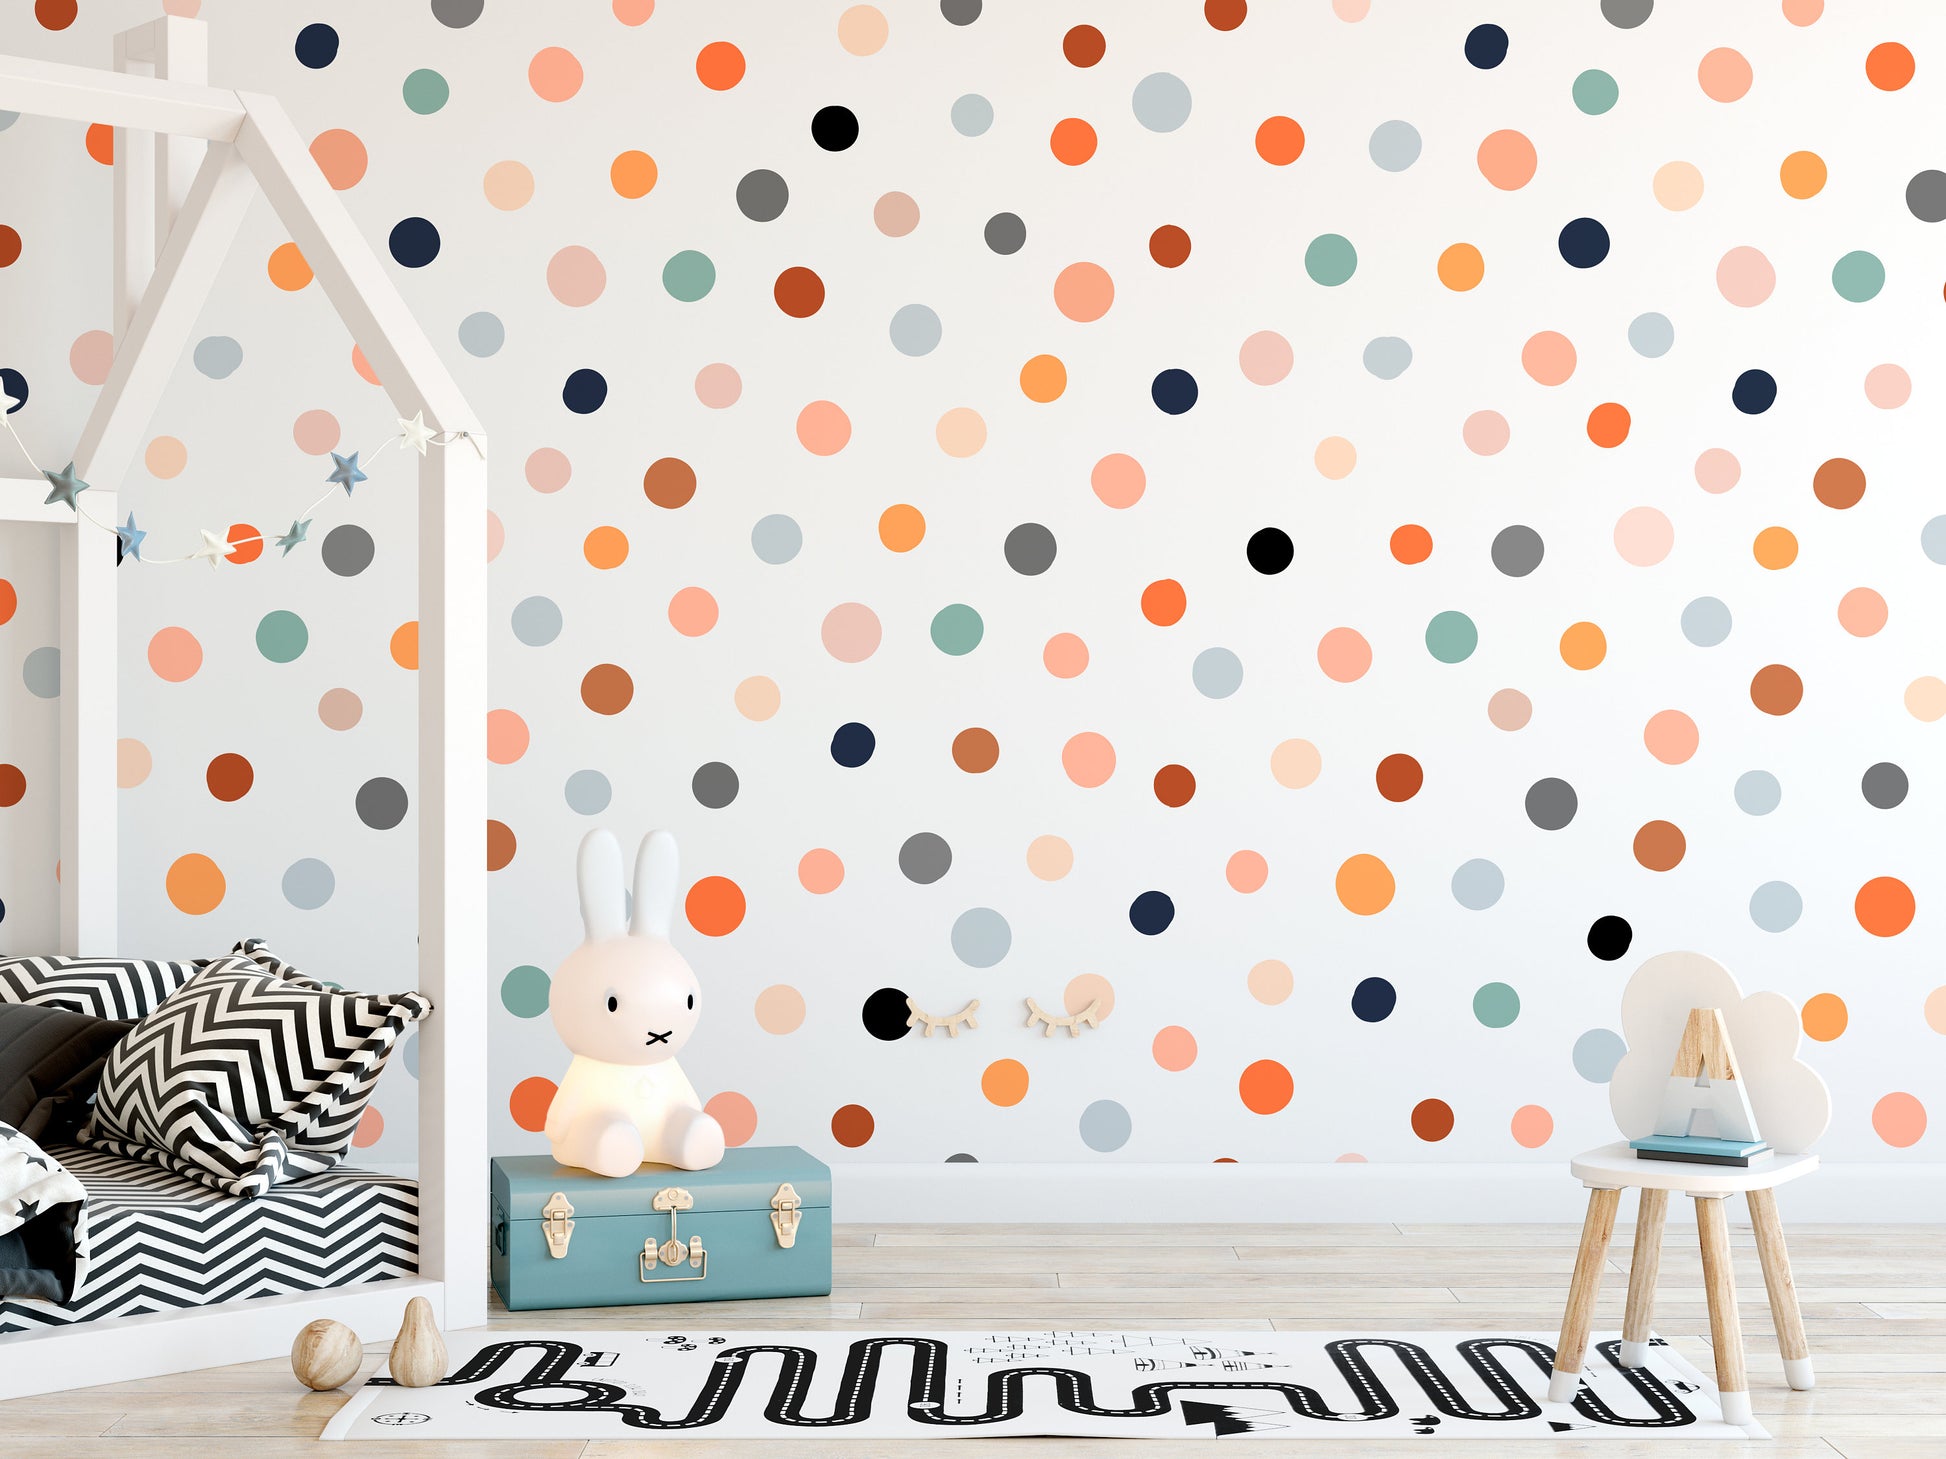 Colourful Polka Dots Nursery Wall Stickers